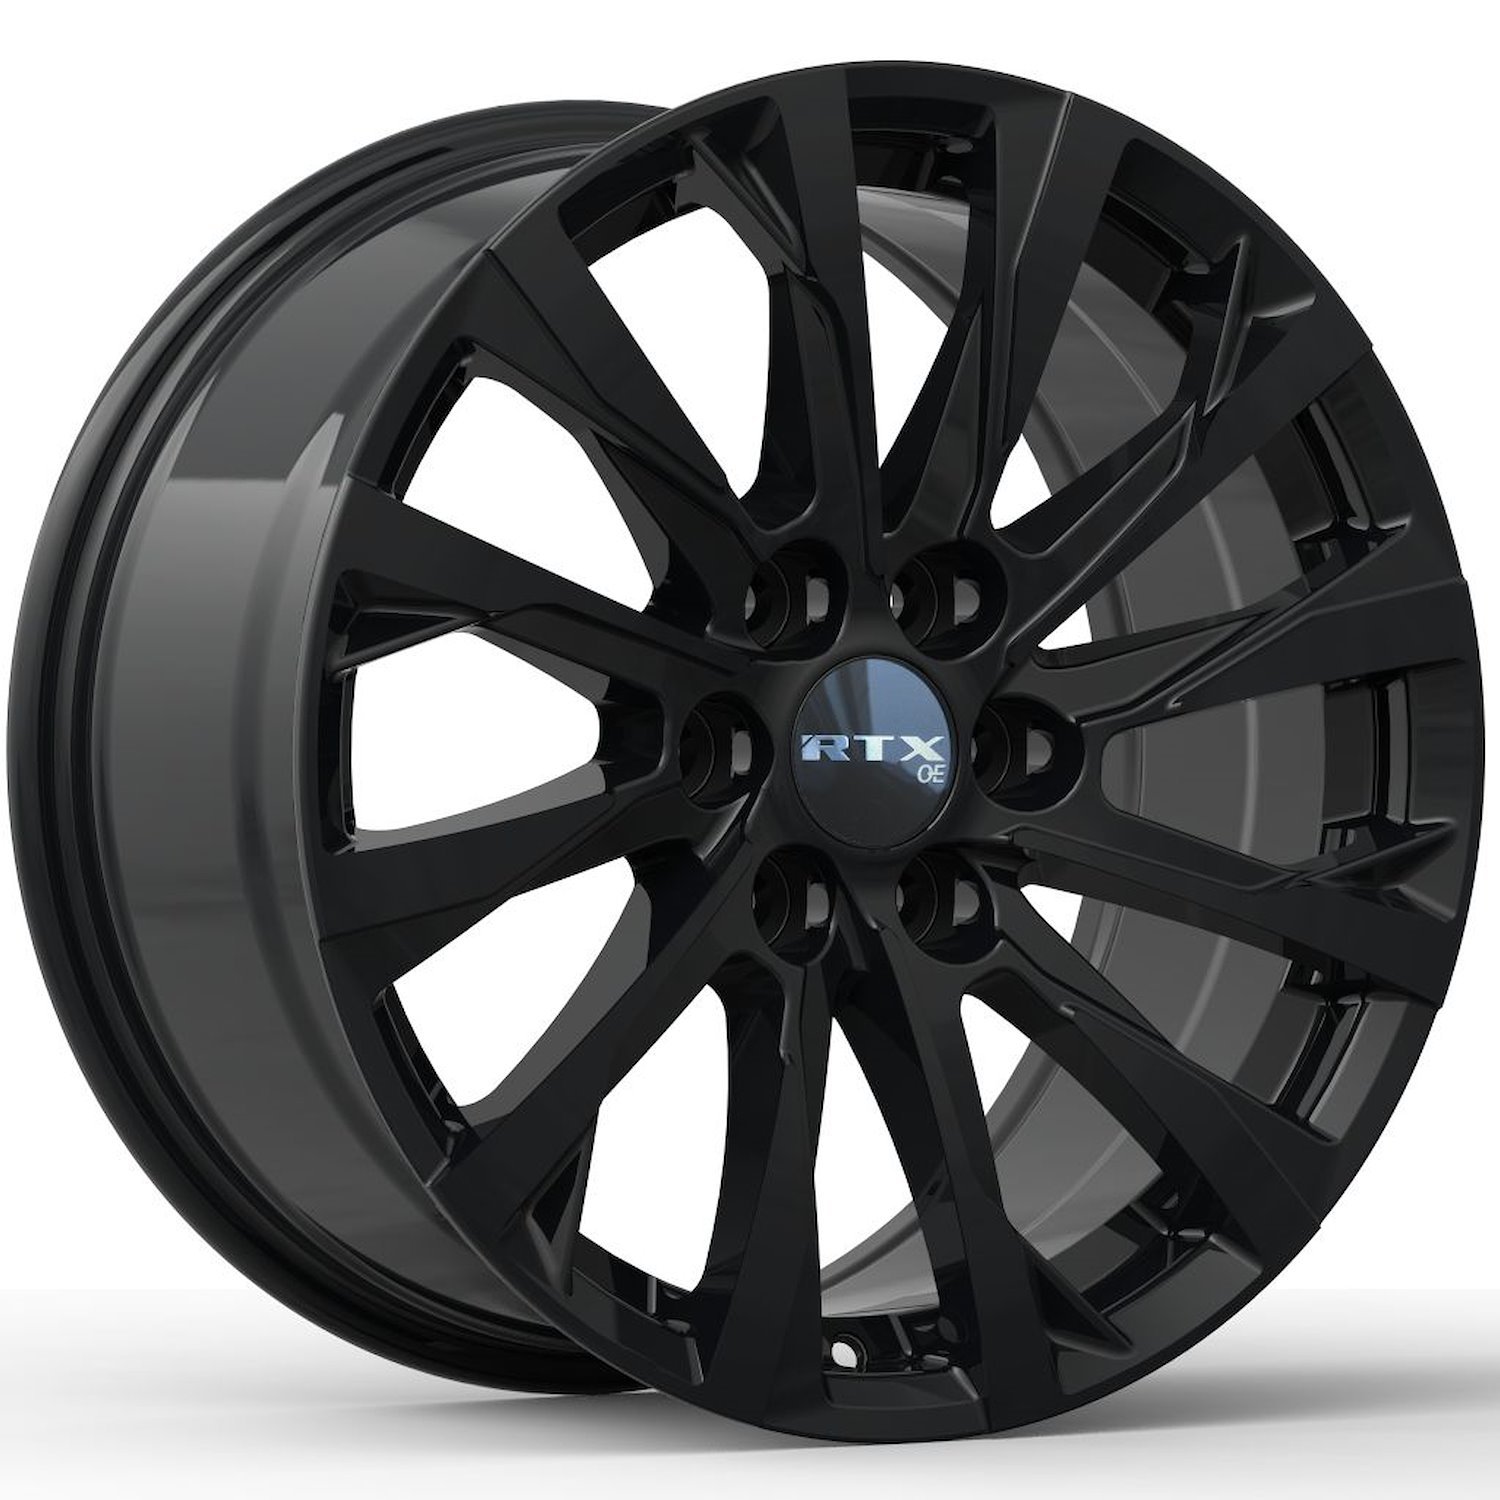 083239 OE-Series GM-03 Wheel [Size: 18" x 8"] Gloss Black Finish